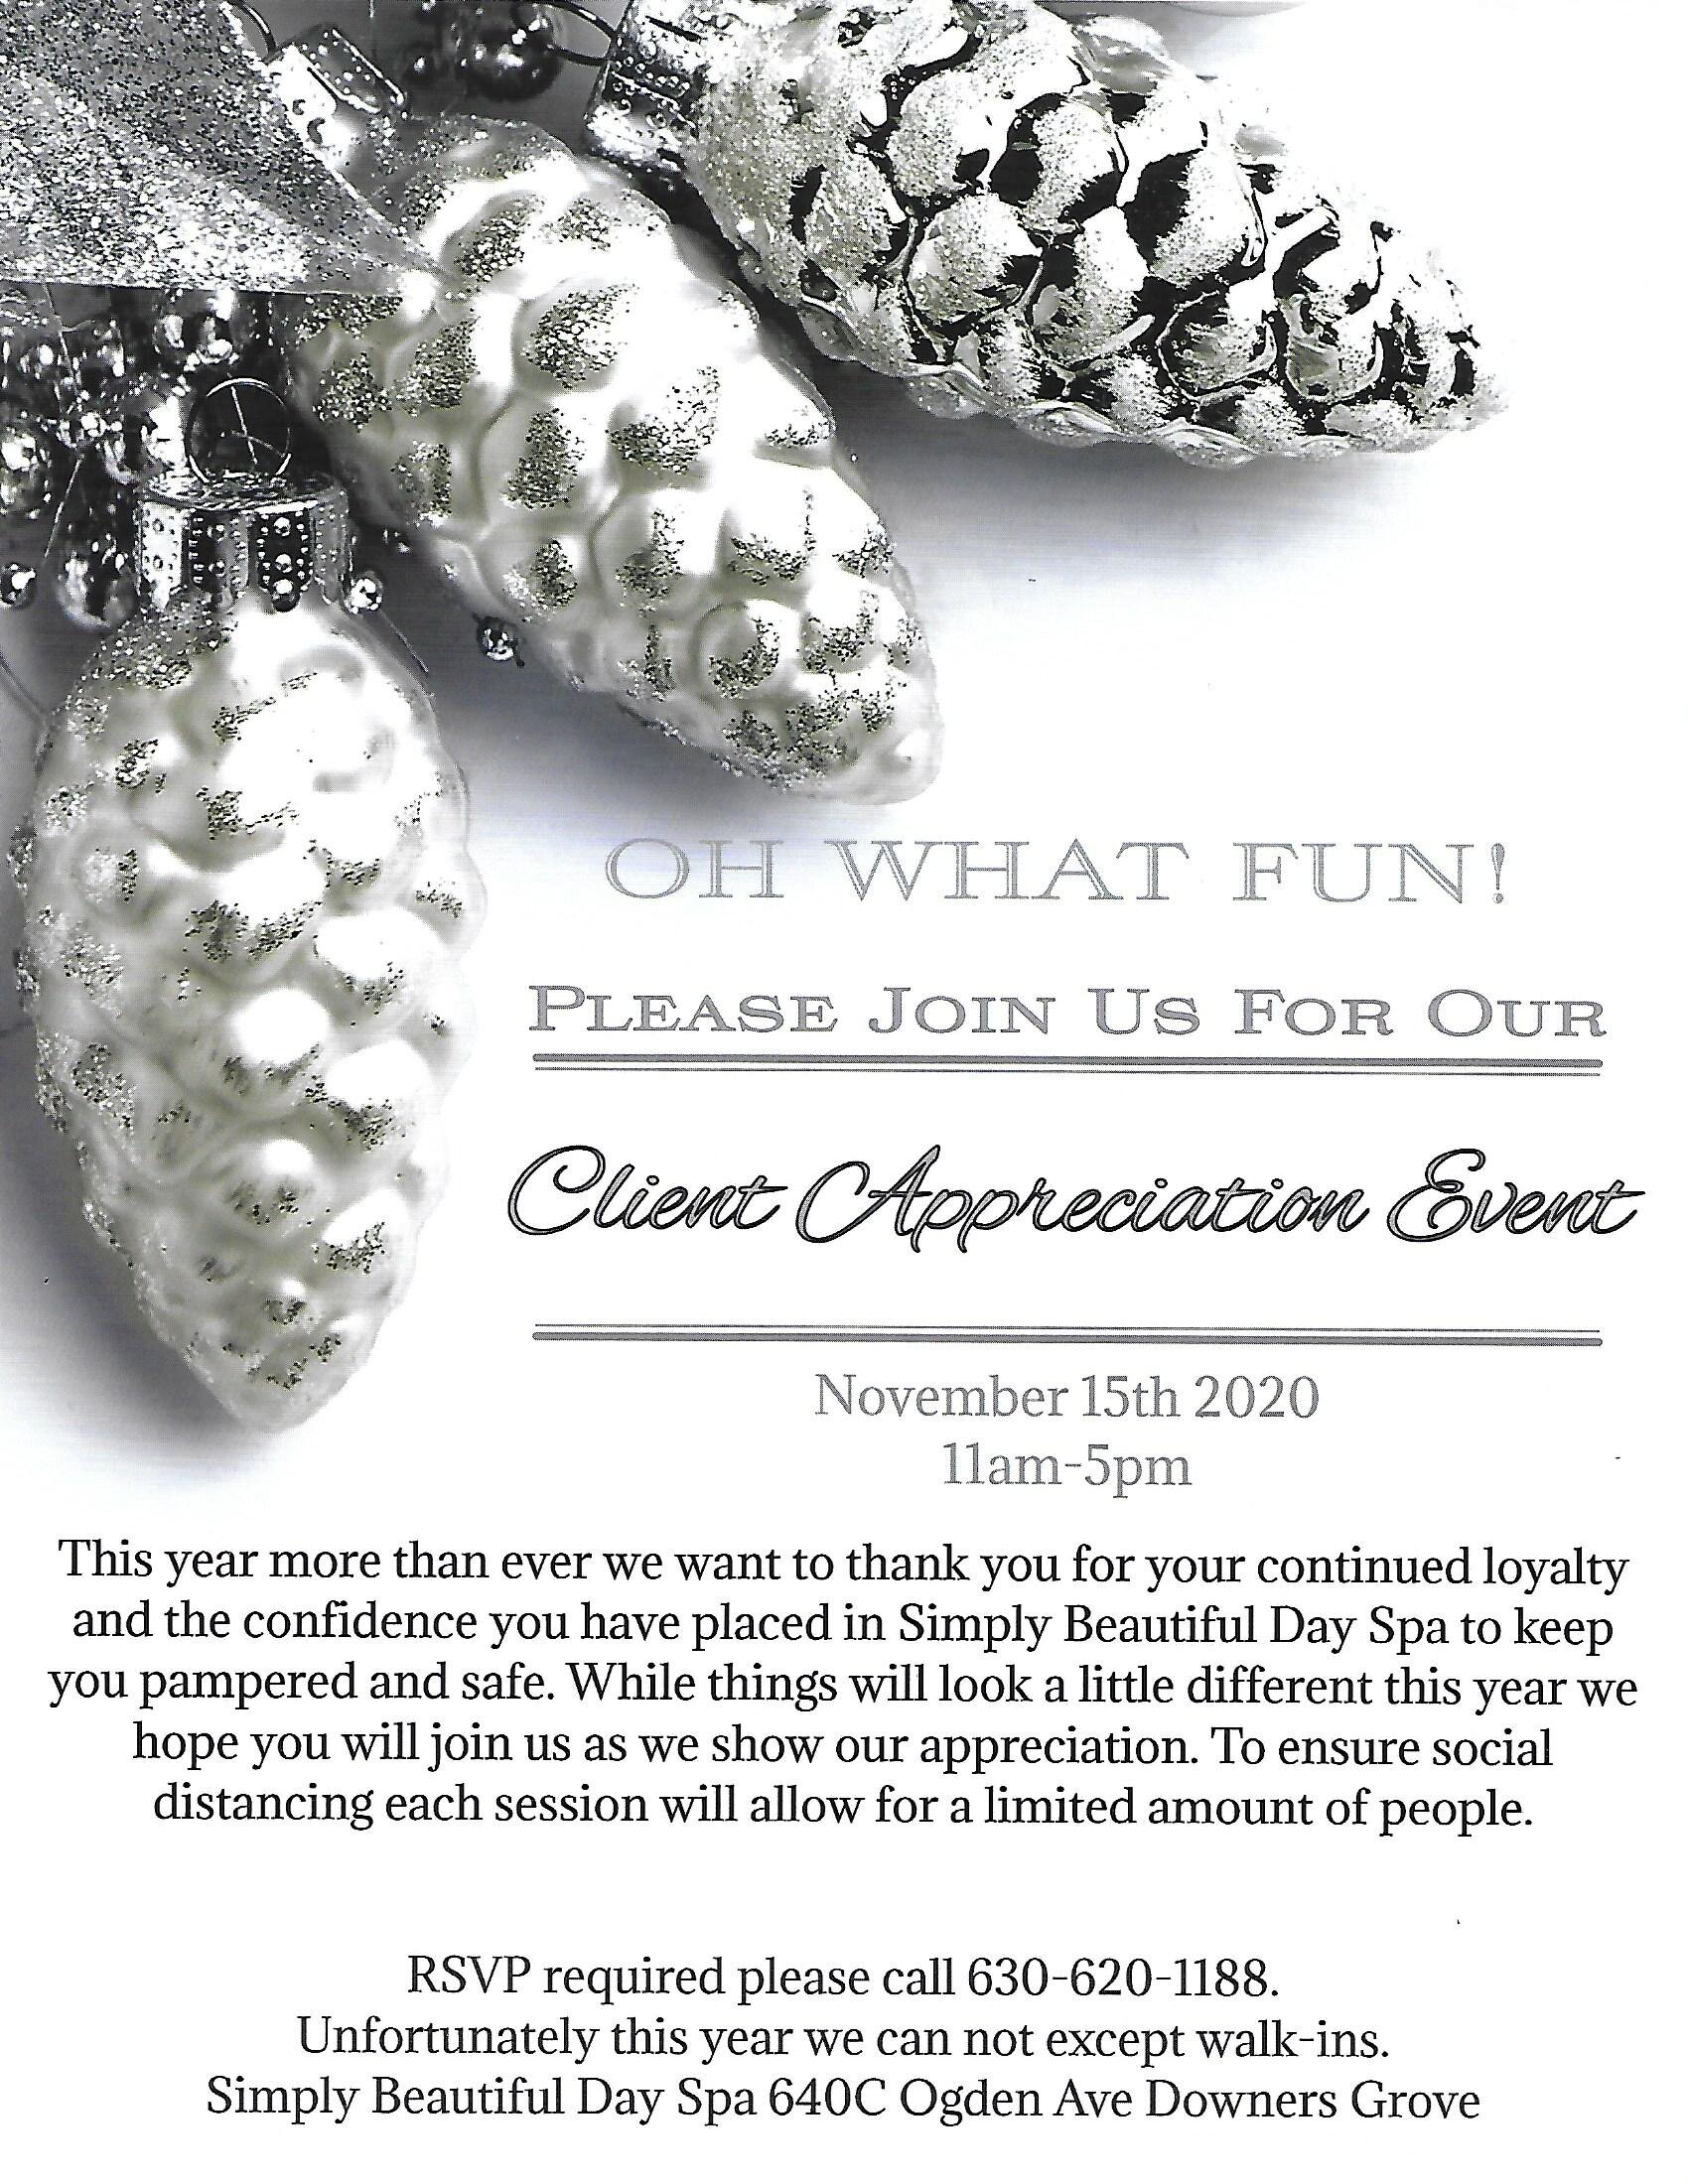 client appreciation event flyer 2020 (front).jpg